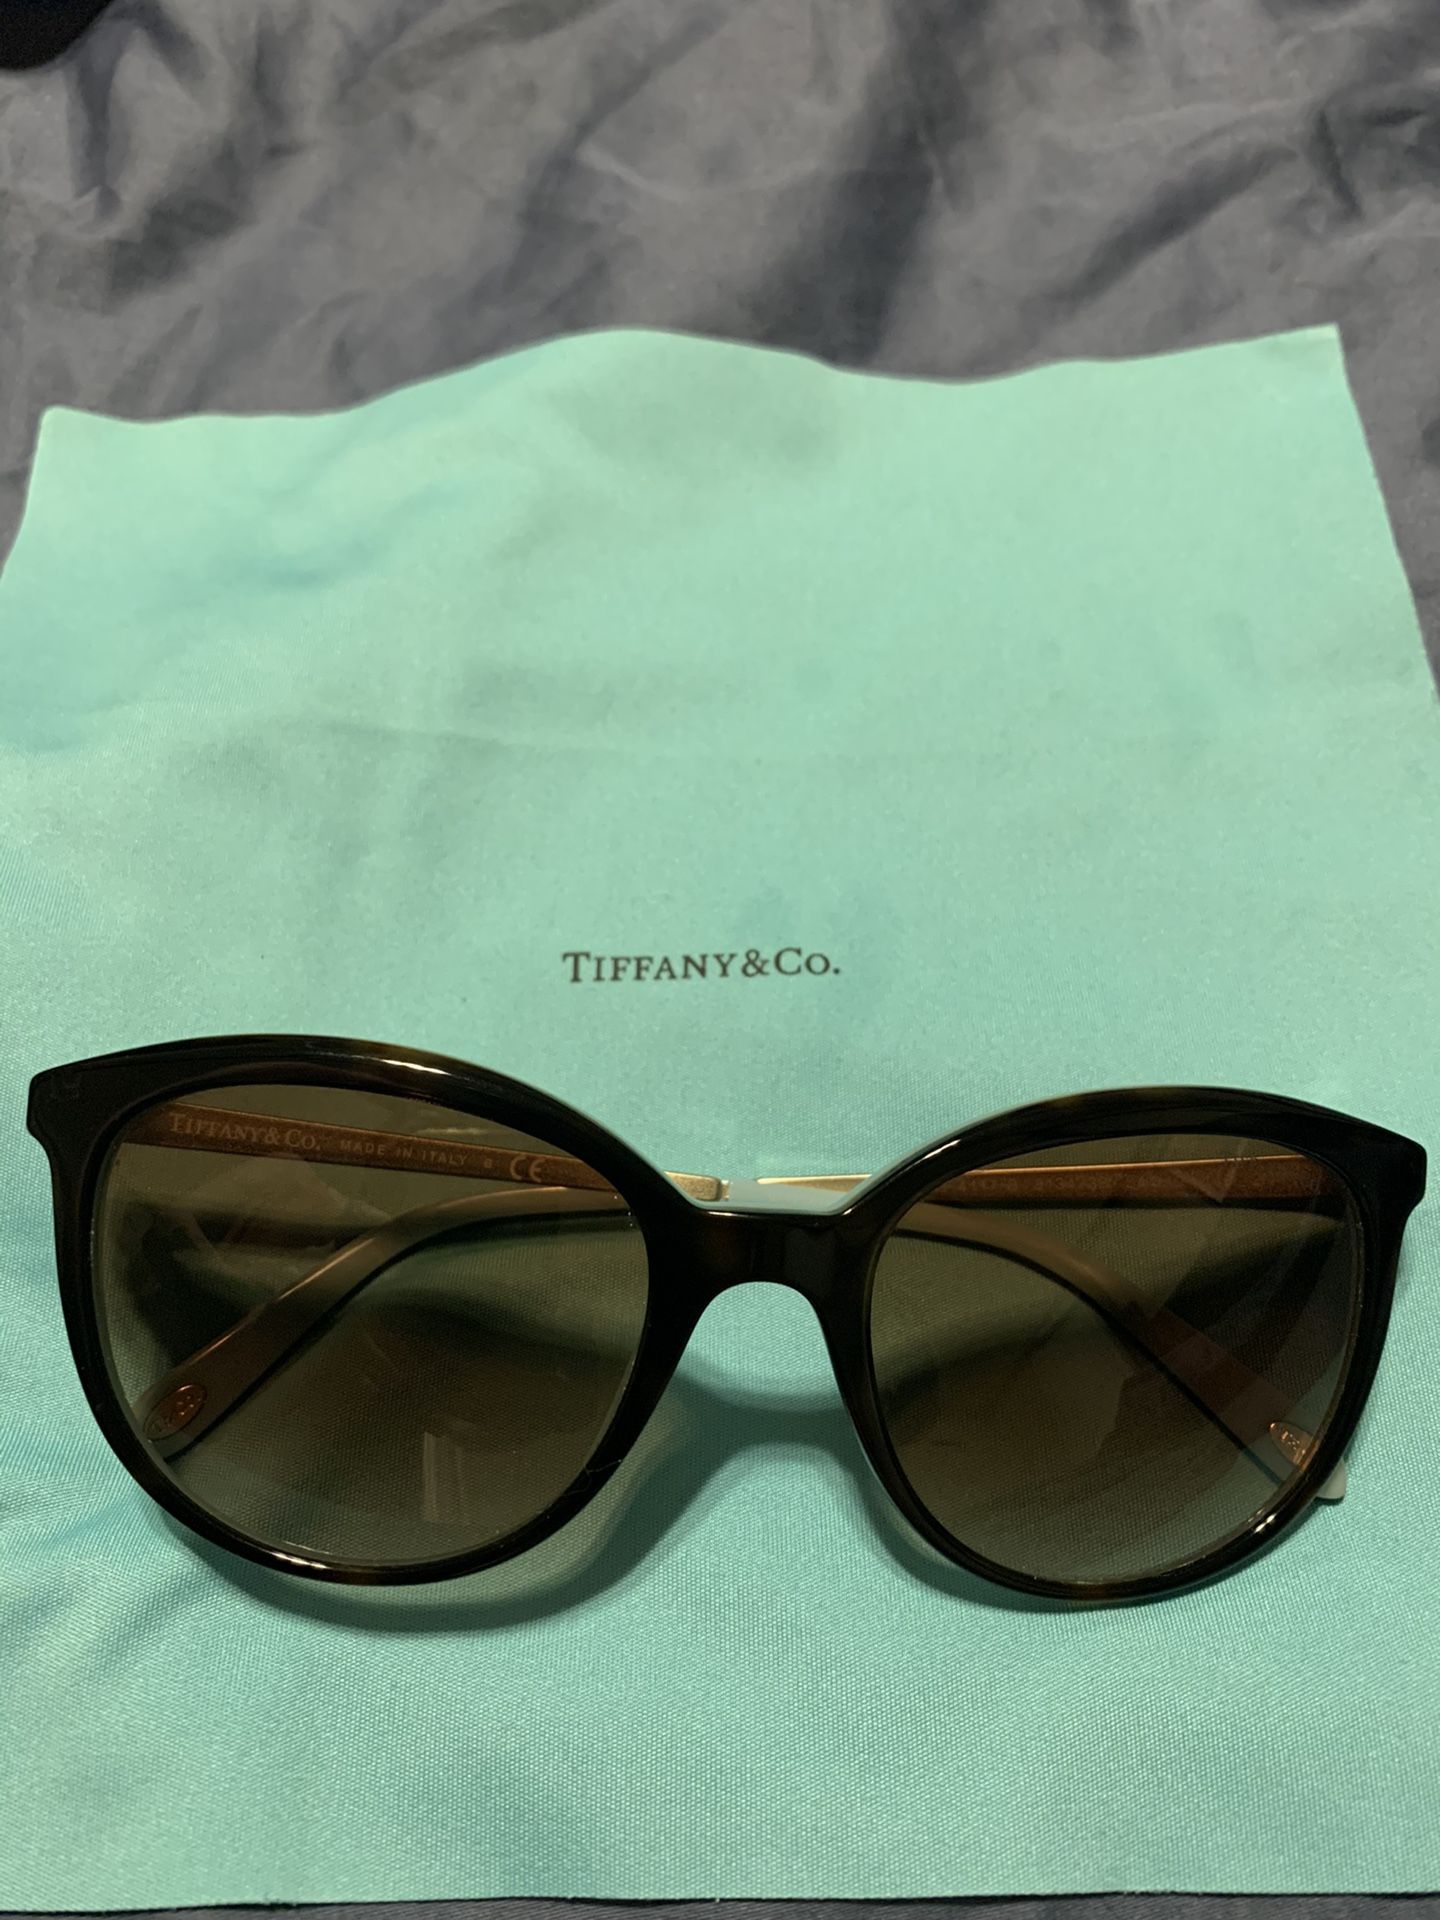 New gorgeous Tiffany glasses